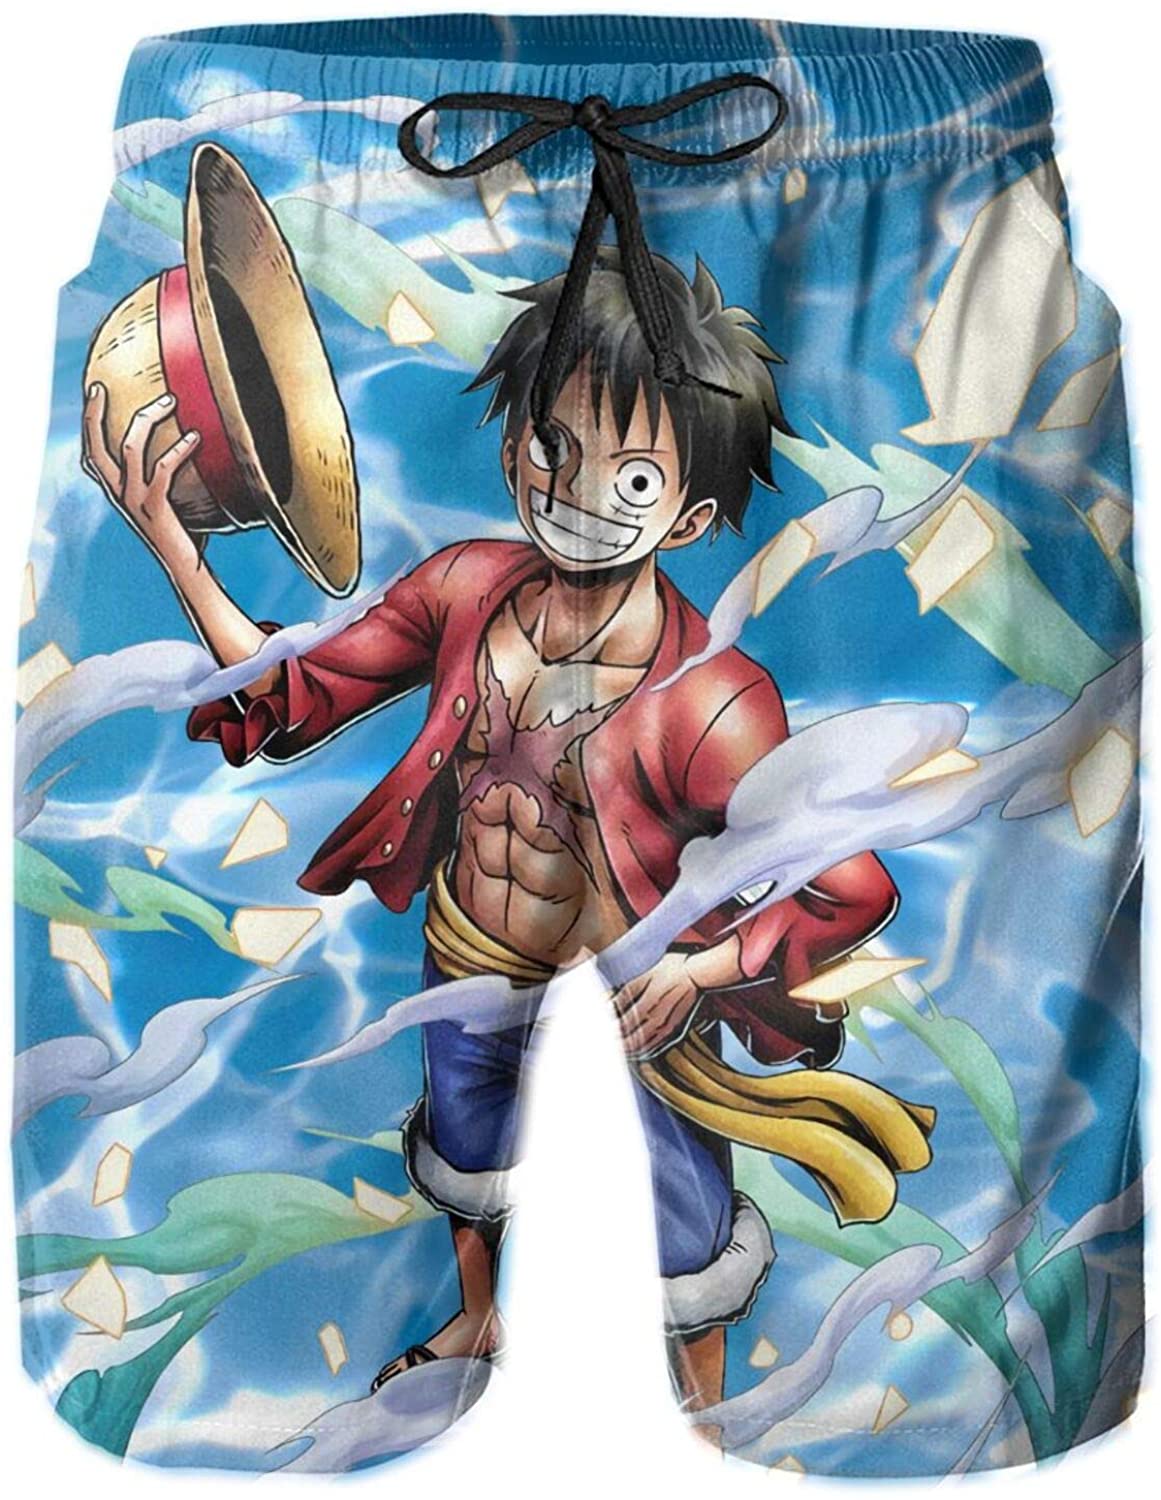 Naruto Swim Trunks Anime Printed Quick Dry Sku 175 Shorts - InkTee Store